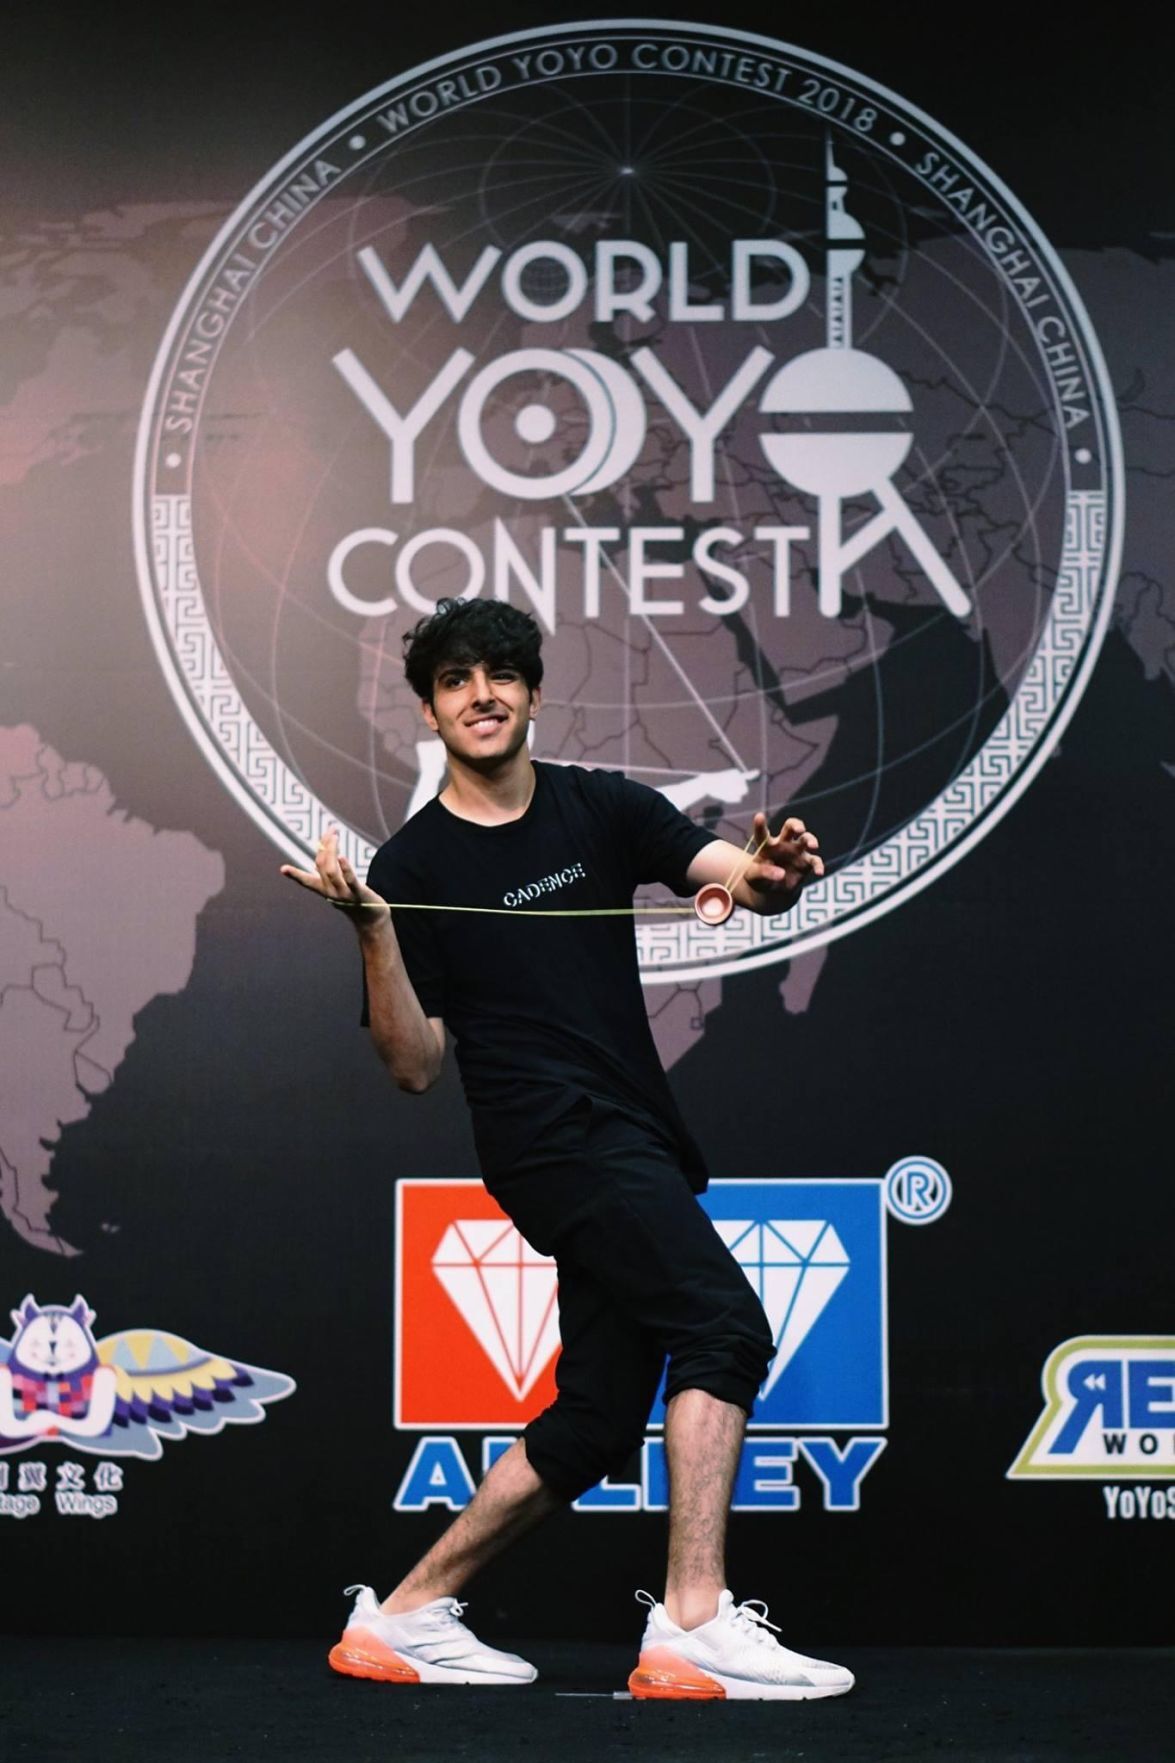 Professional yo-yoer spins his way Netflix series | Local News | napavalleyregister.com